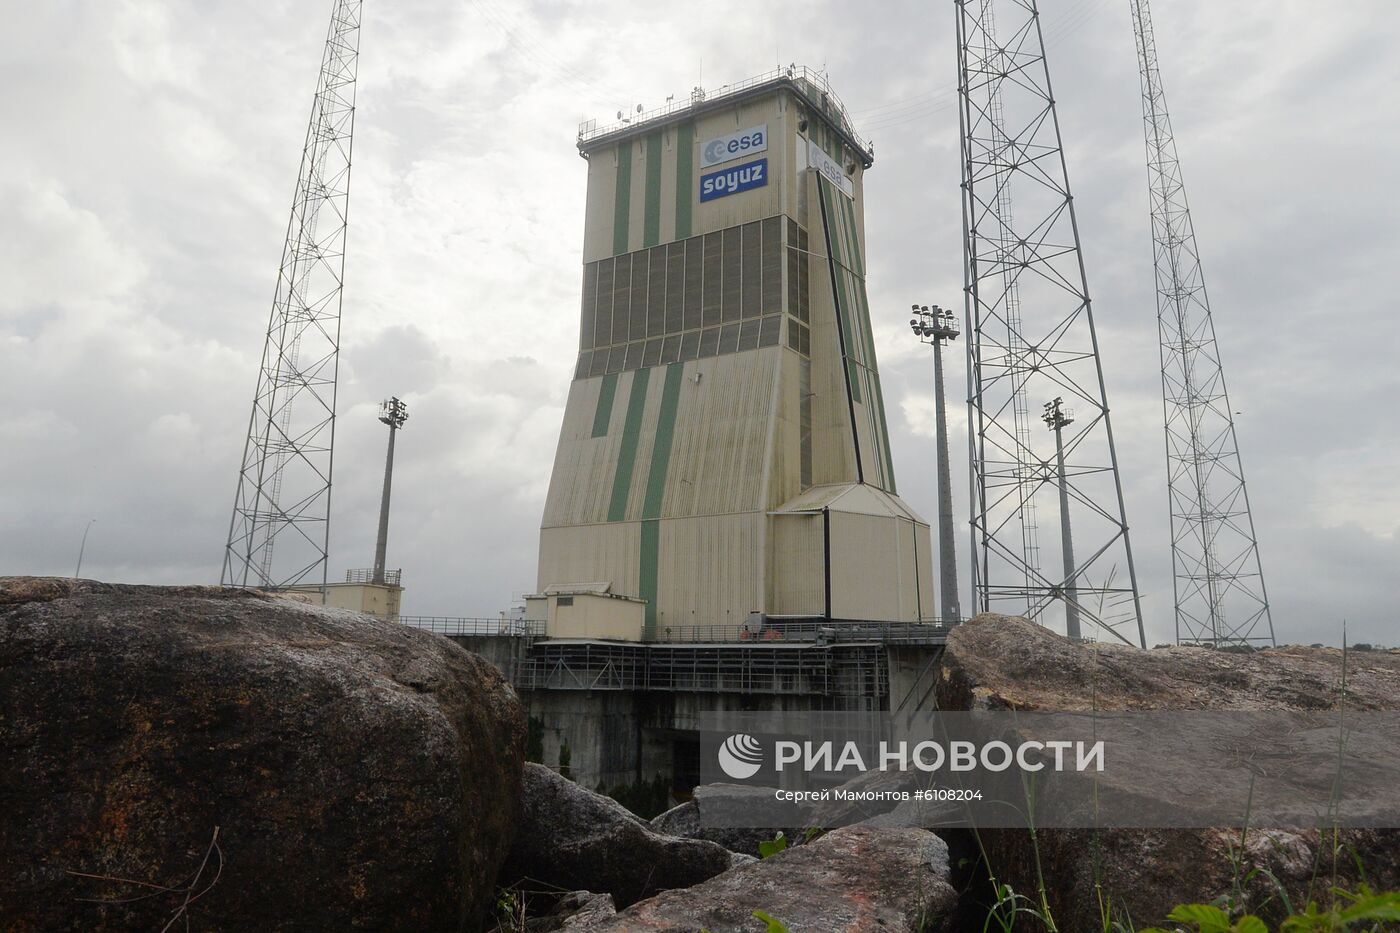 Пуск ракеты "Союз-СТ" отложен на сутки